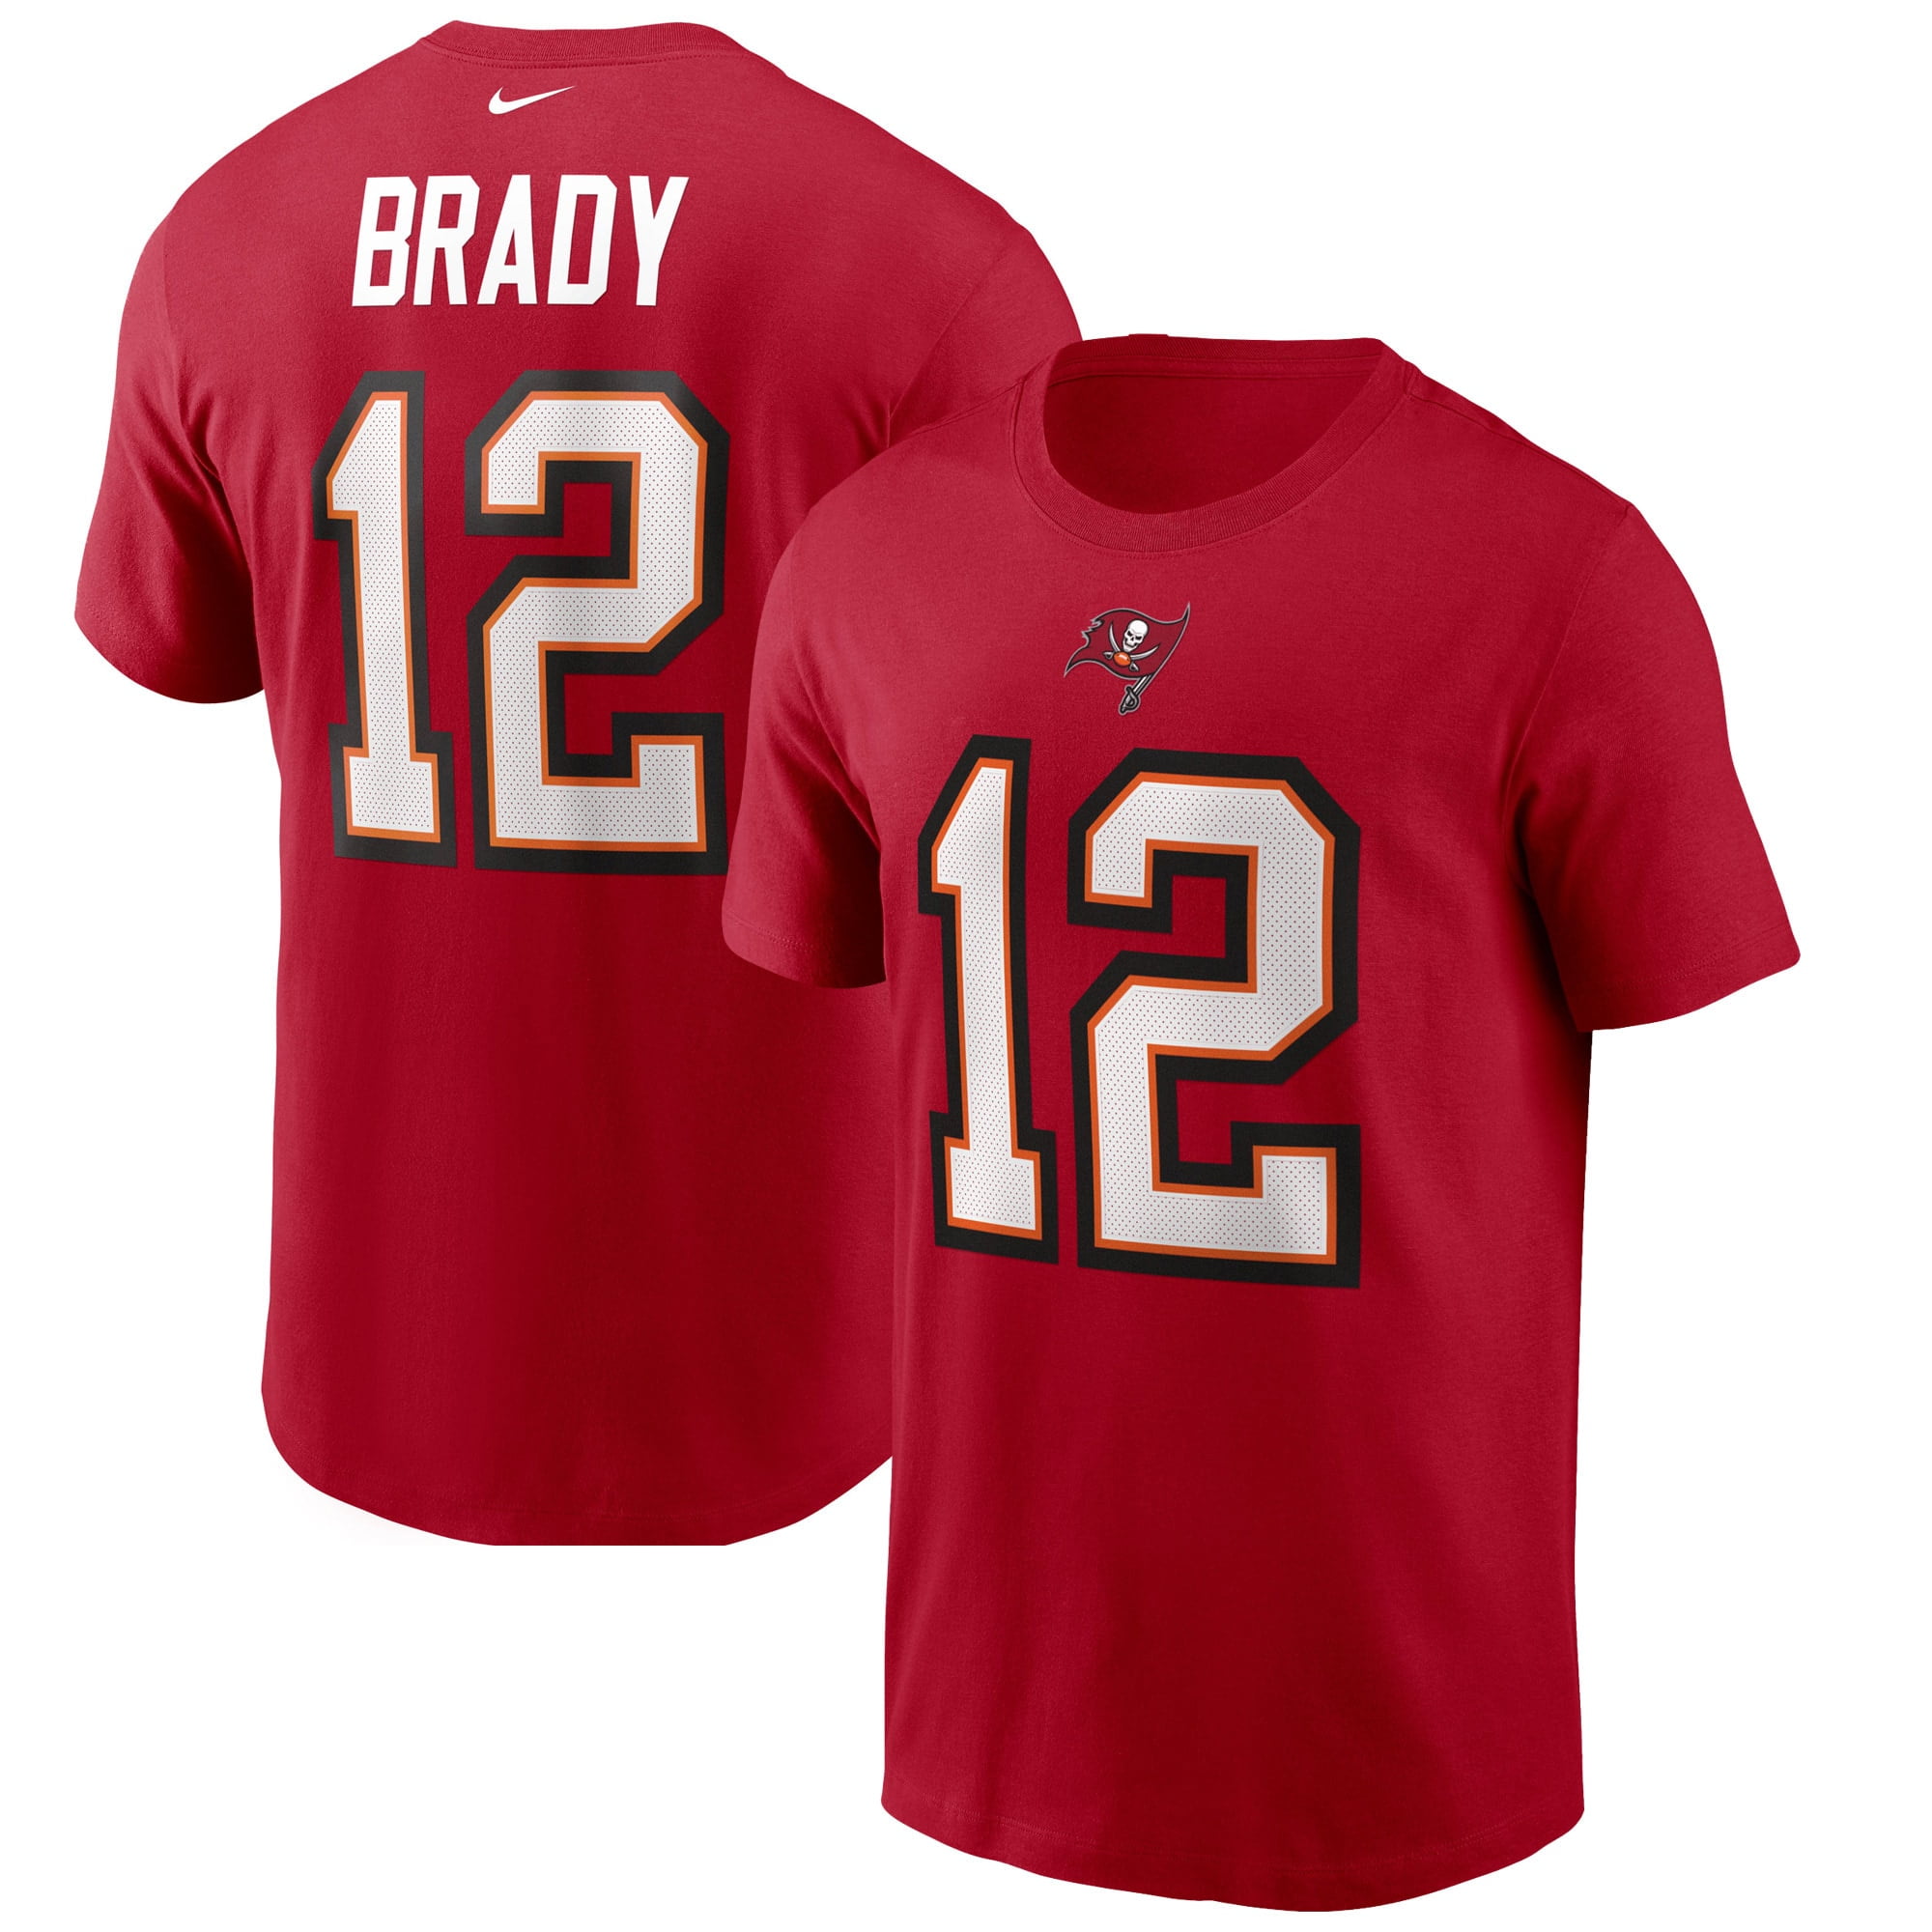 T-shirt pour homme avec uniforme de football américain Tampa Bay Buccaneers #12 Brady Maillot de football Gruby Tee Shirts 